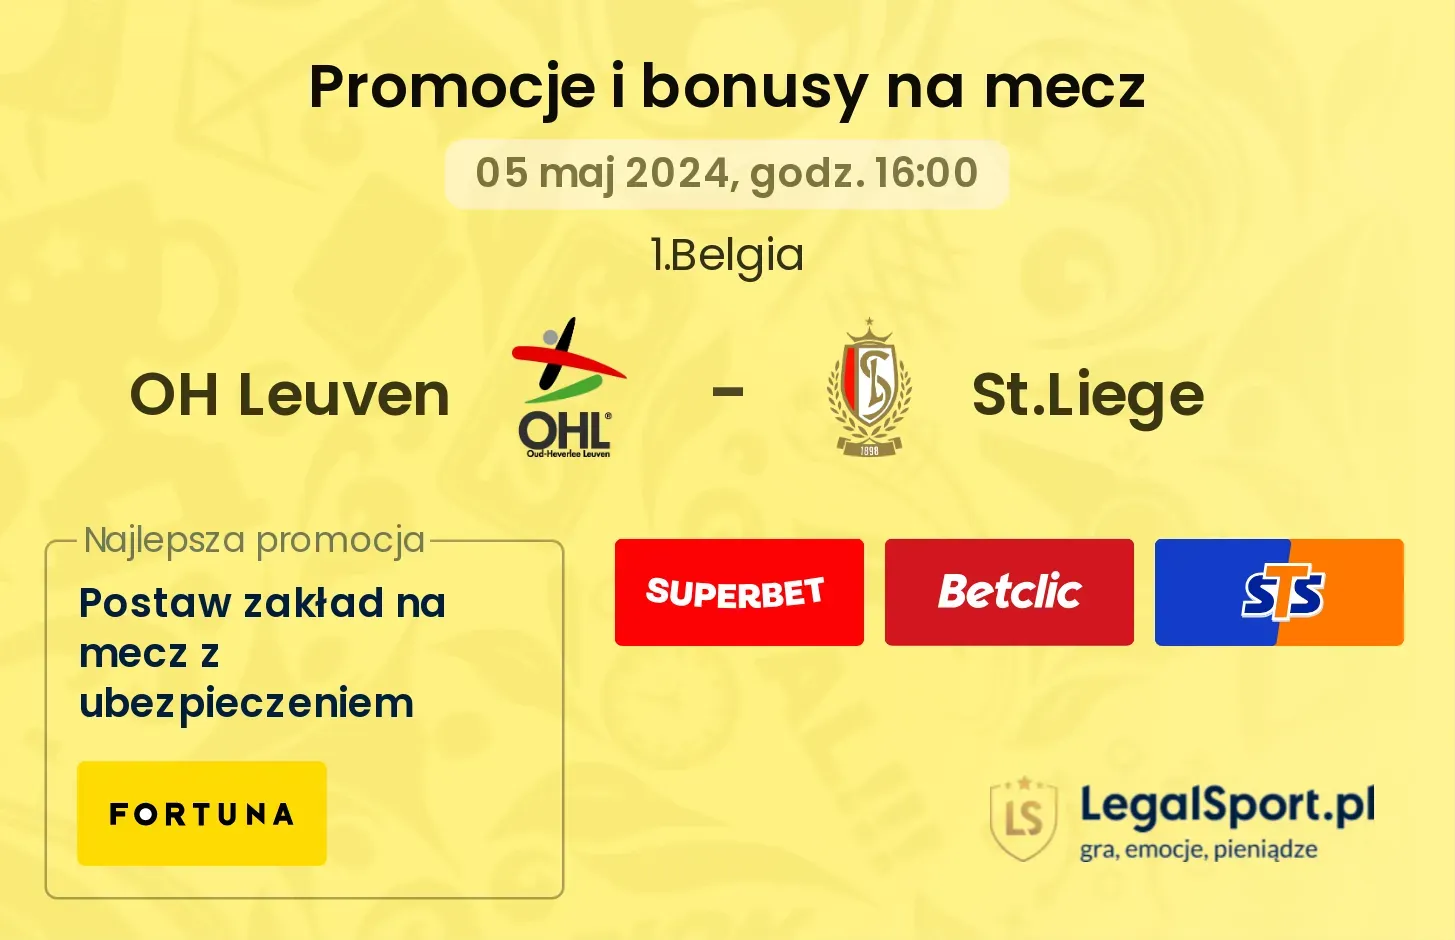 OH Leuven - St.Liege promocje bonusy na mecz